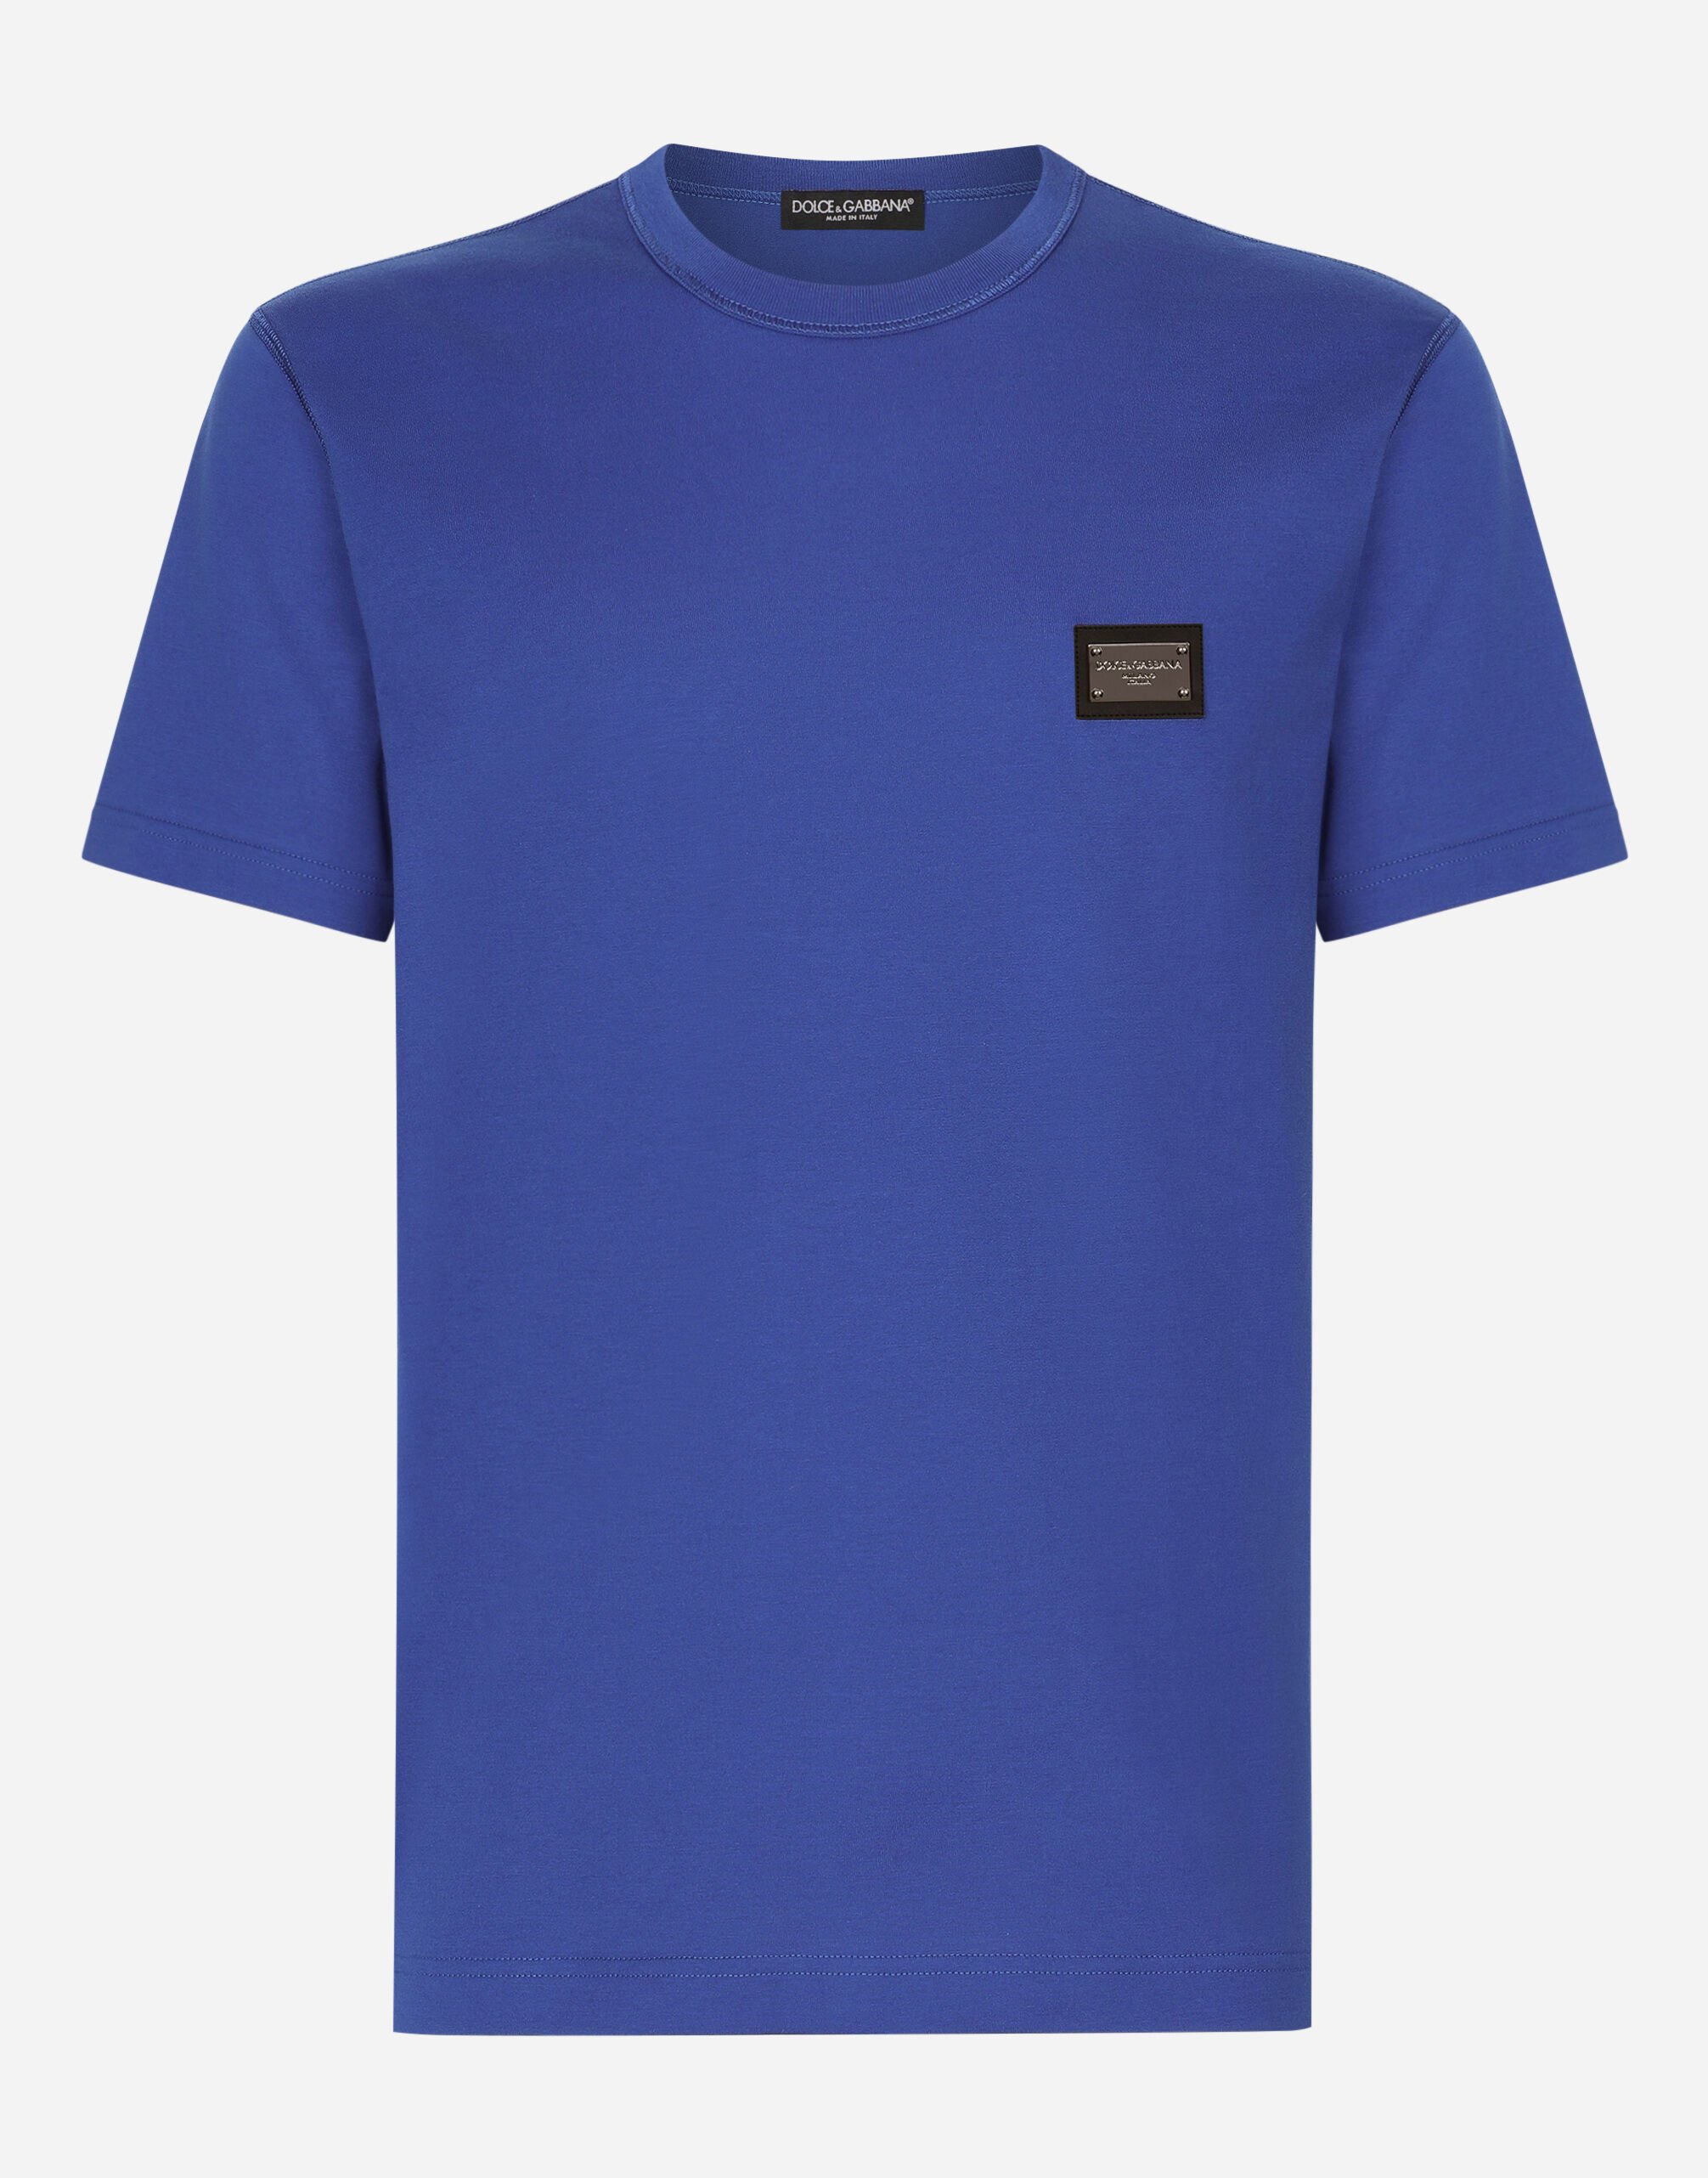 Dolce&Gabbana Baumwoll-T-Shirt mit Logoplakette Blau G9ZY5LHULR0